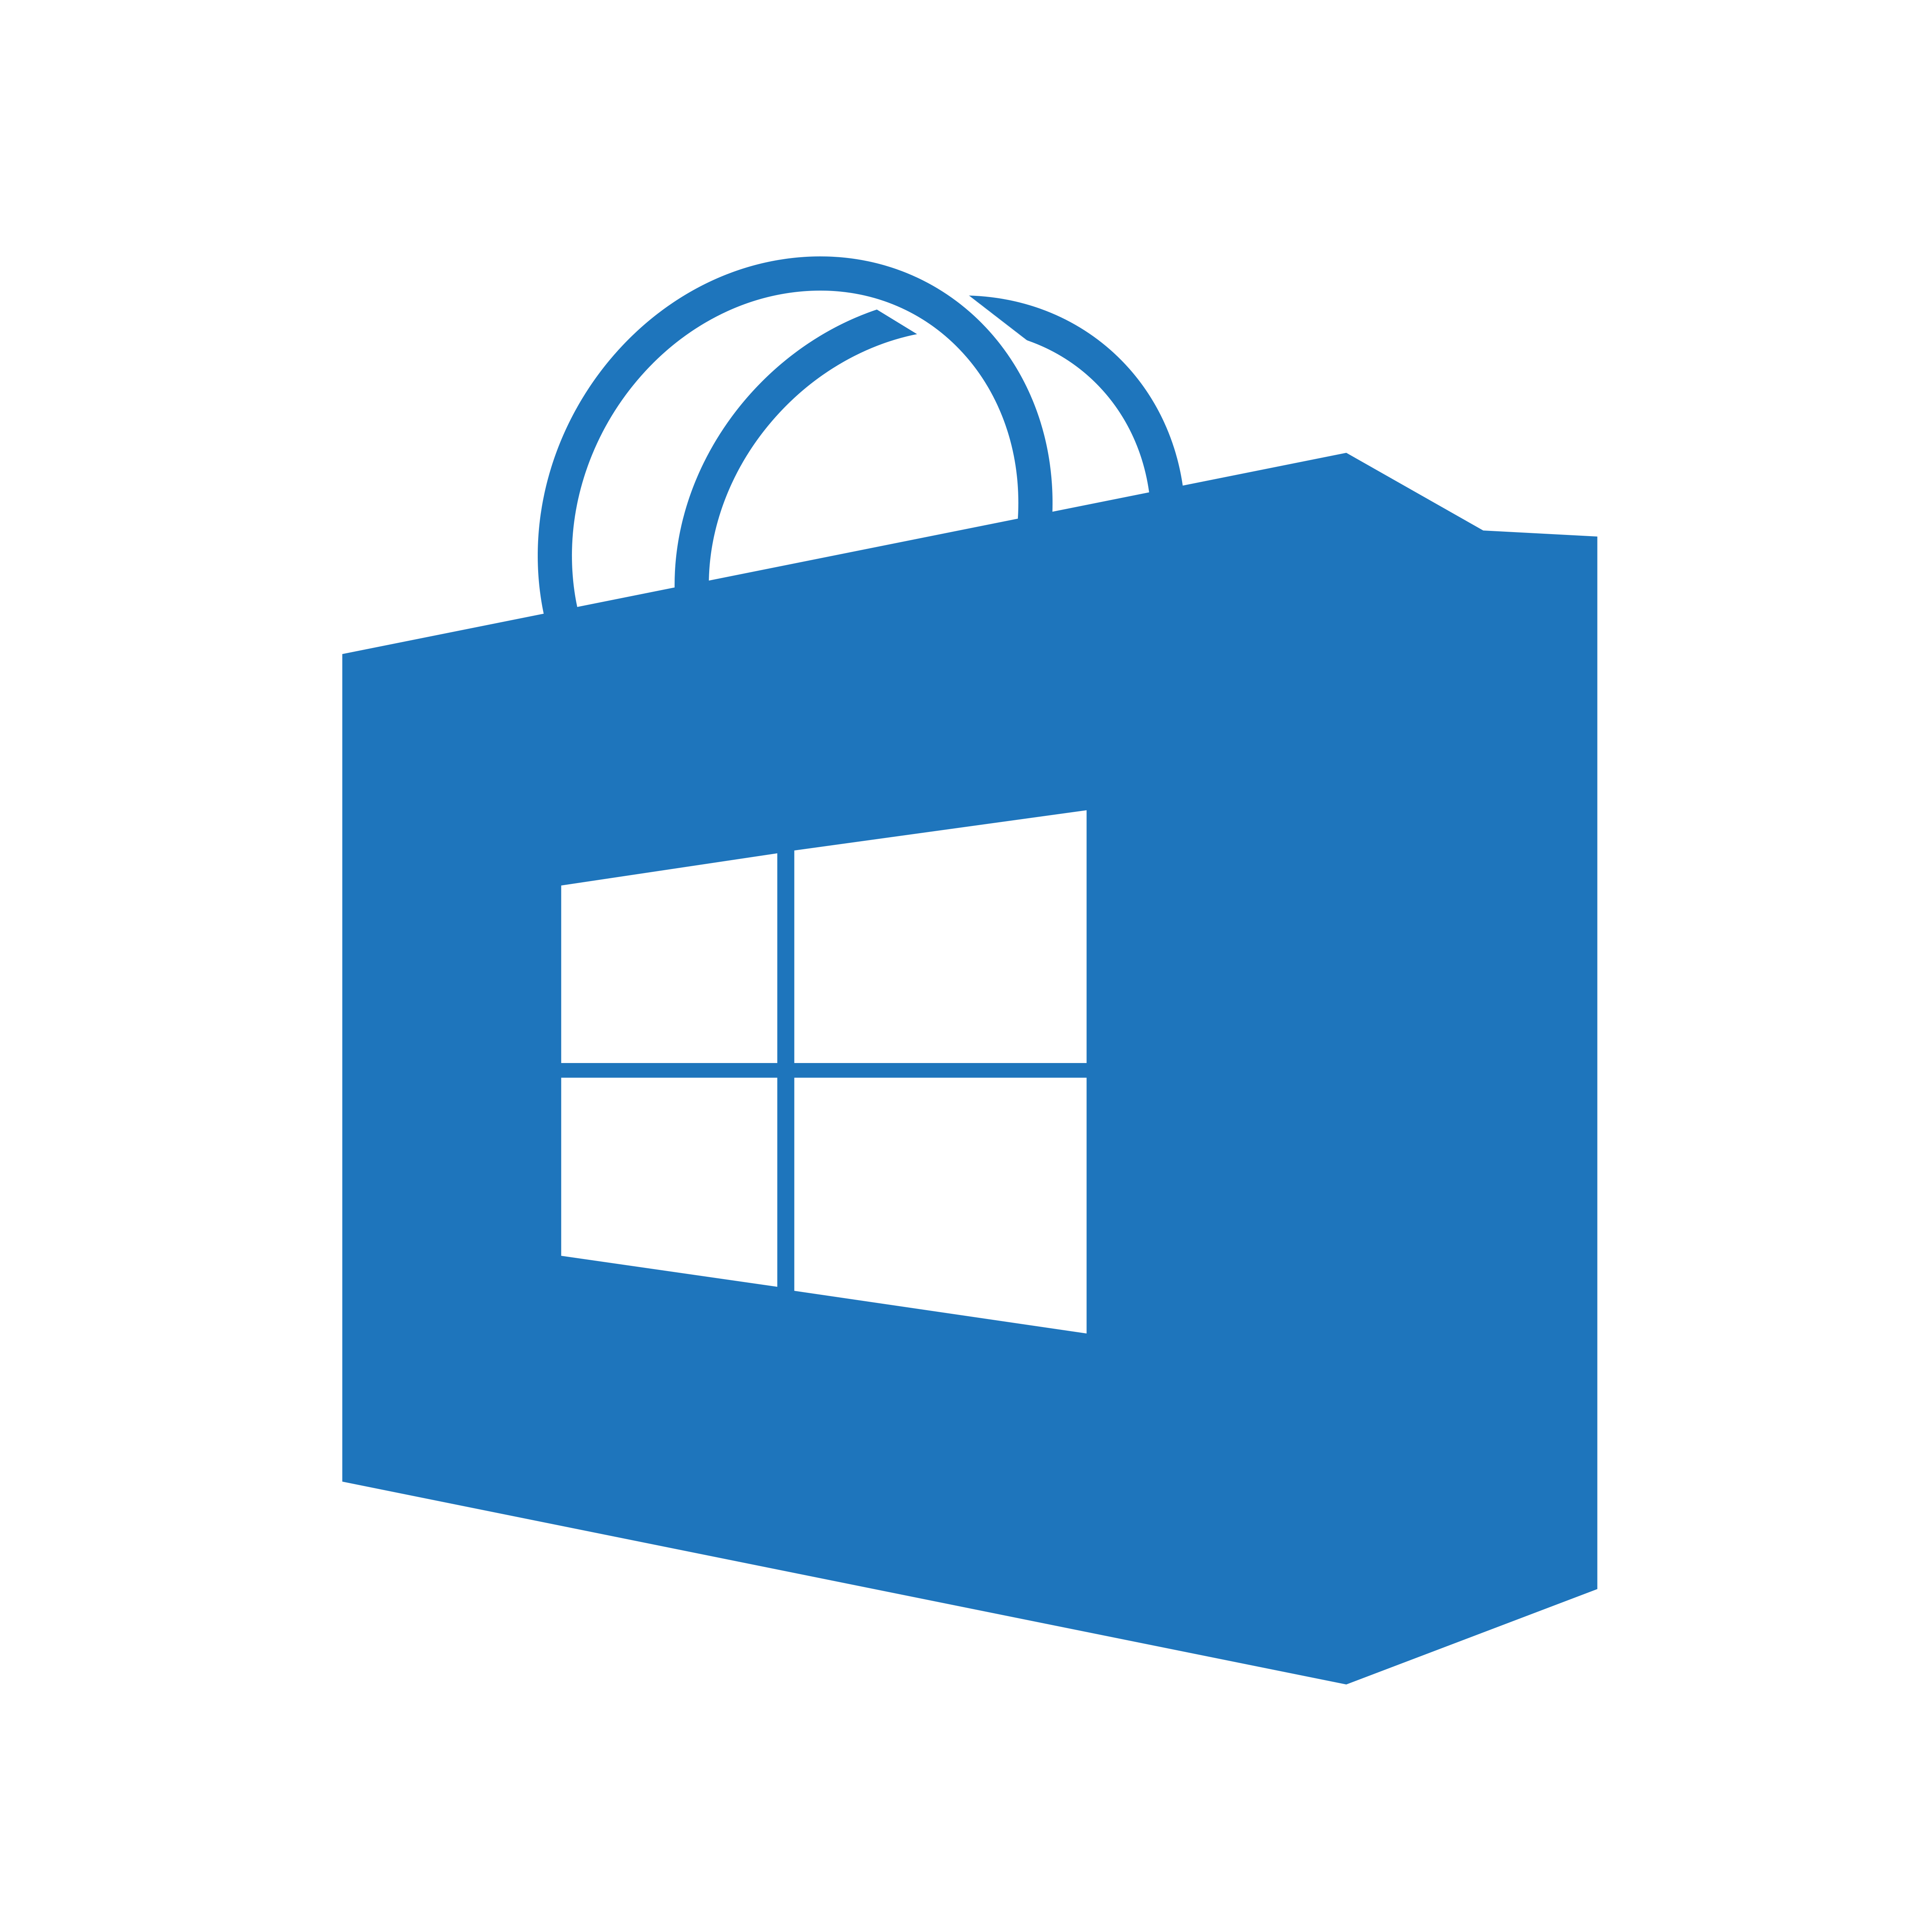 Windows Store Icon Transparentblue Homemade By Bannax1994 On